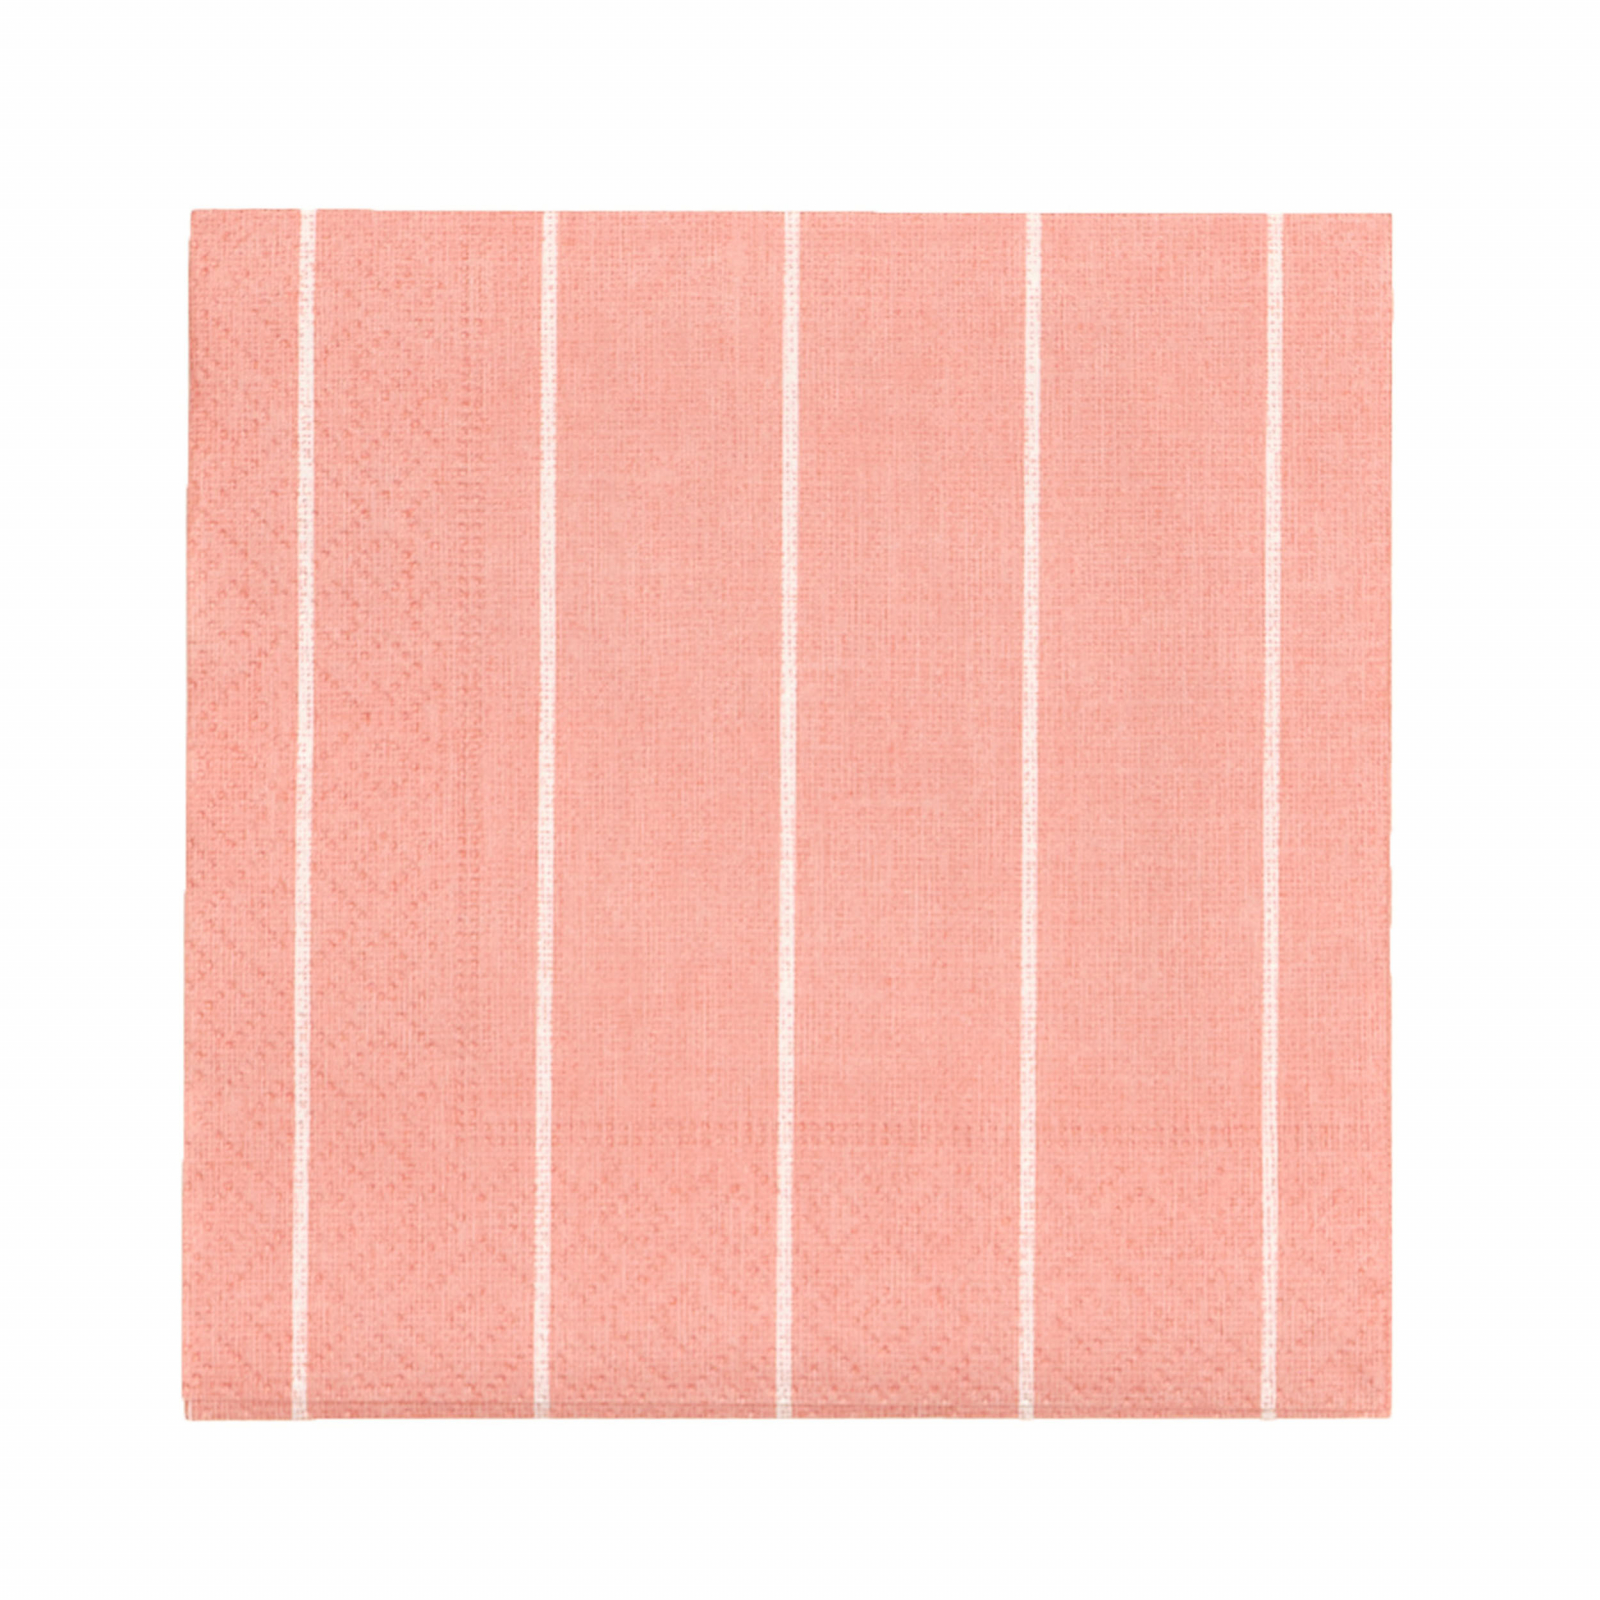 Karaca Home Pink Striped Kağıt Peçete 20'li 24x24 cm 